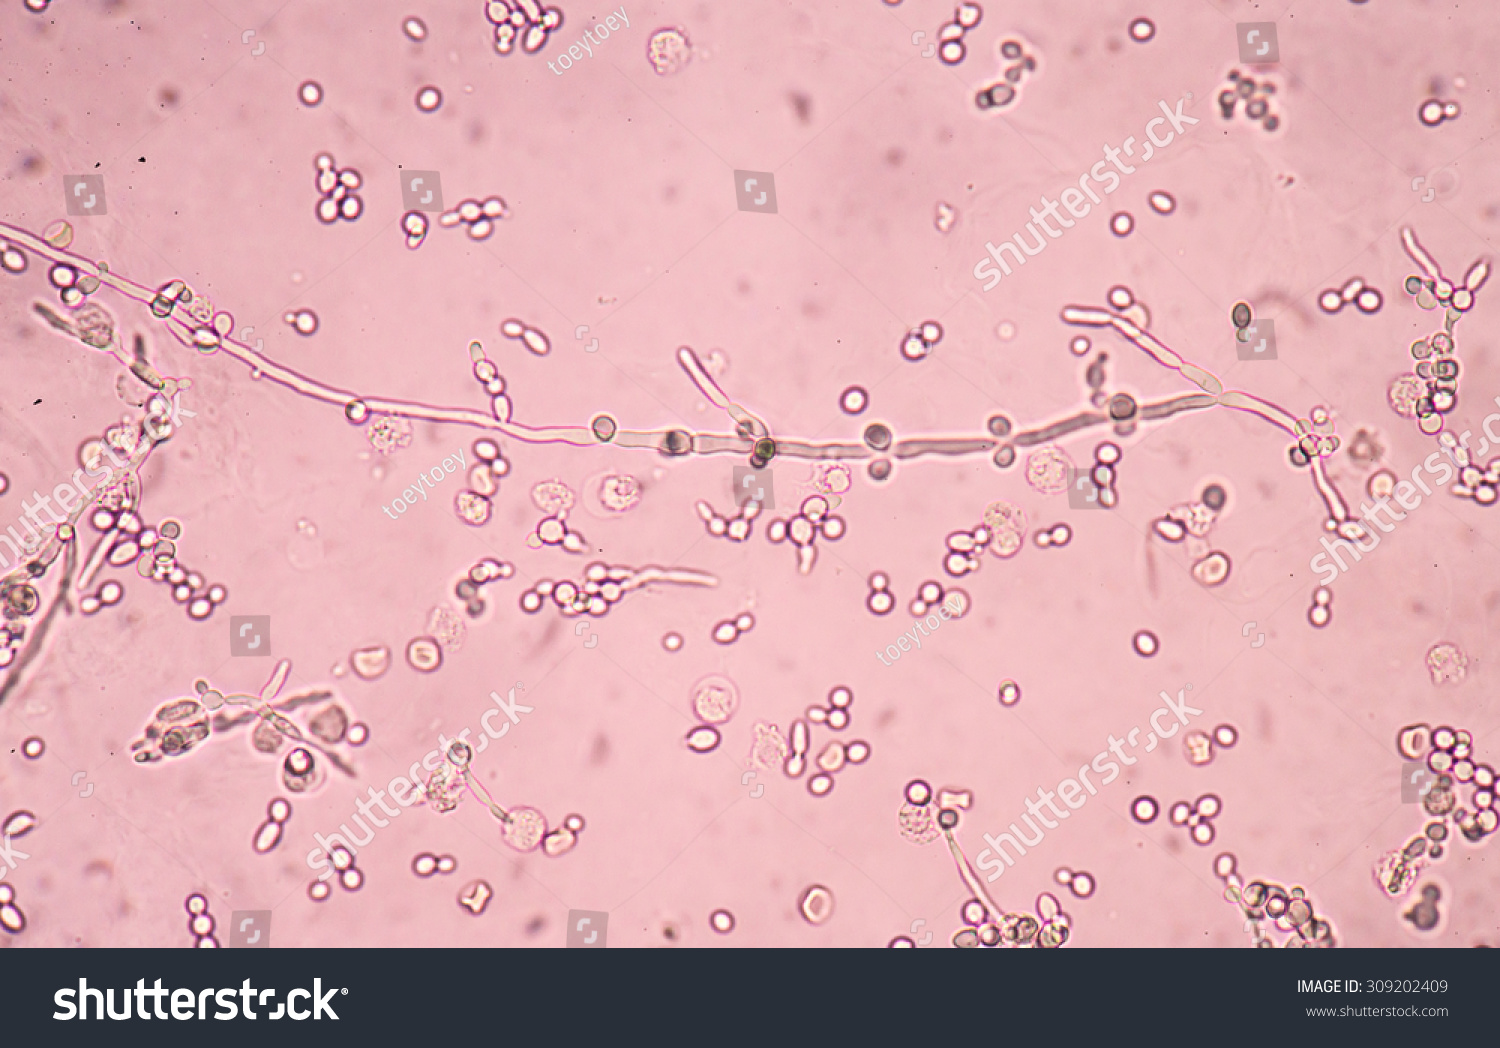 Budding Yeast Cells Pseudohyphae Urine Sample Stock Photo Shutterstock